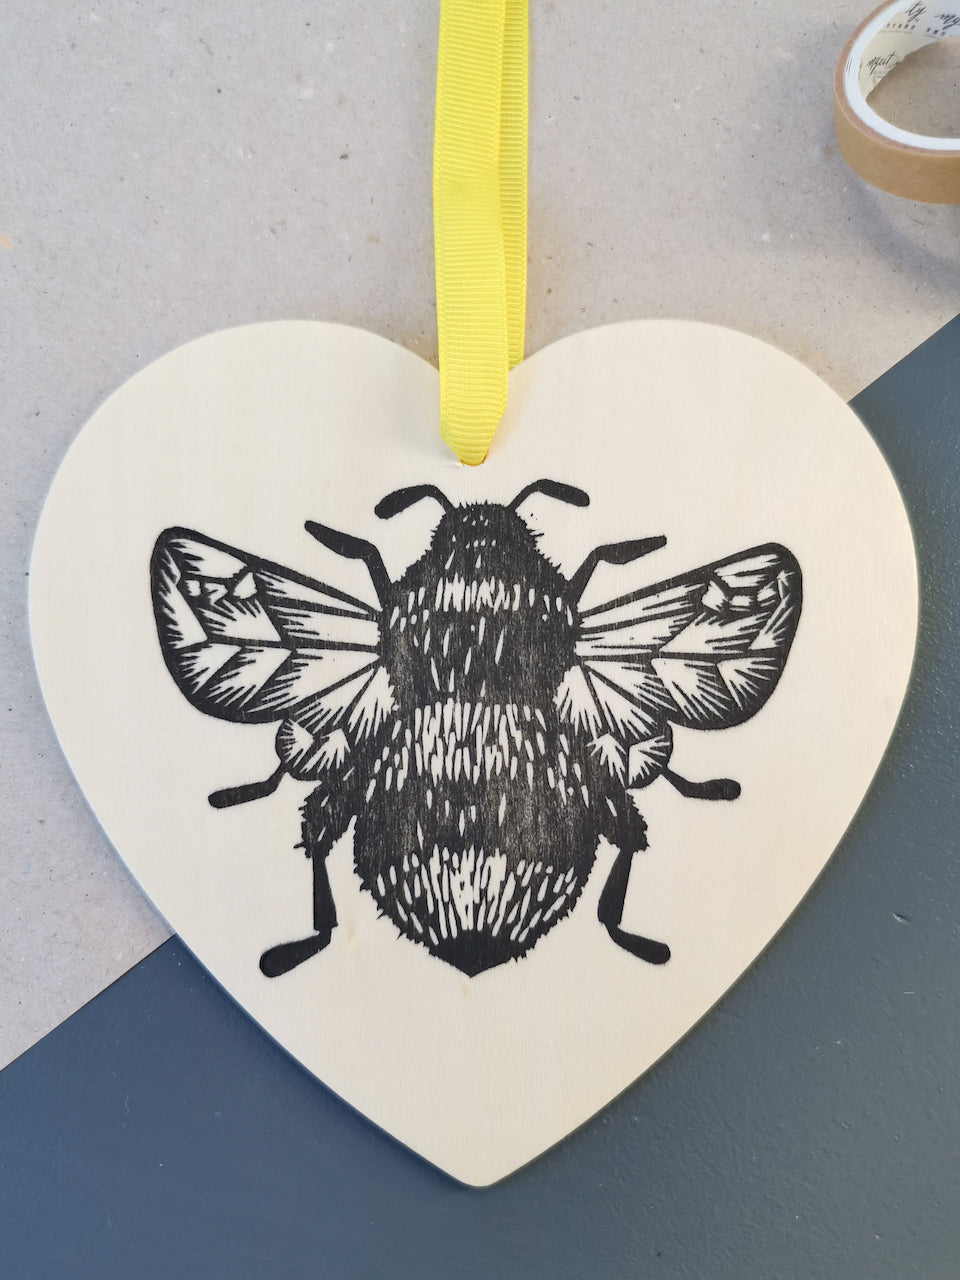 Bumblebee heart hanging decoration - wooden hand printed Linocut